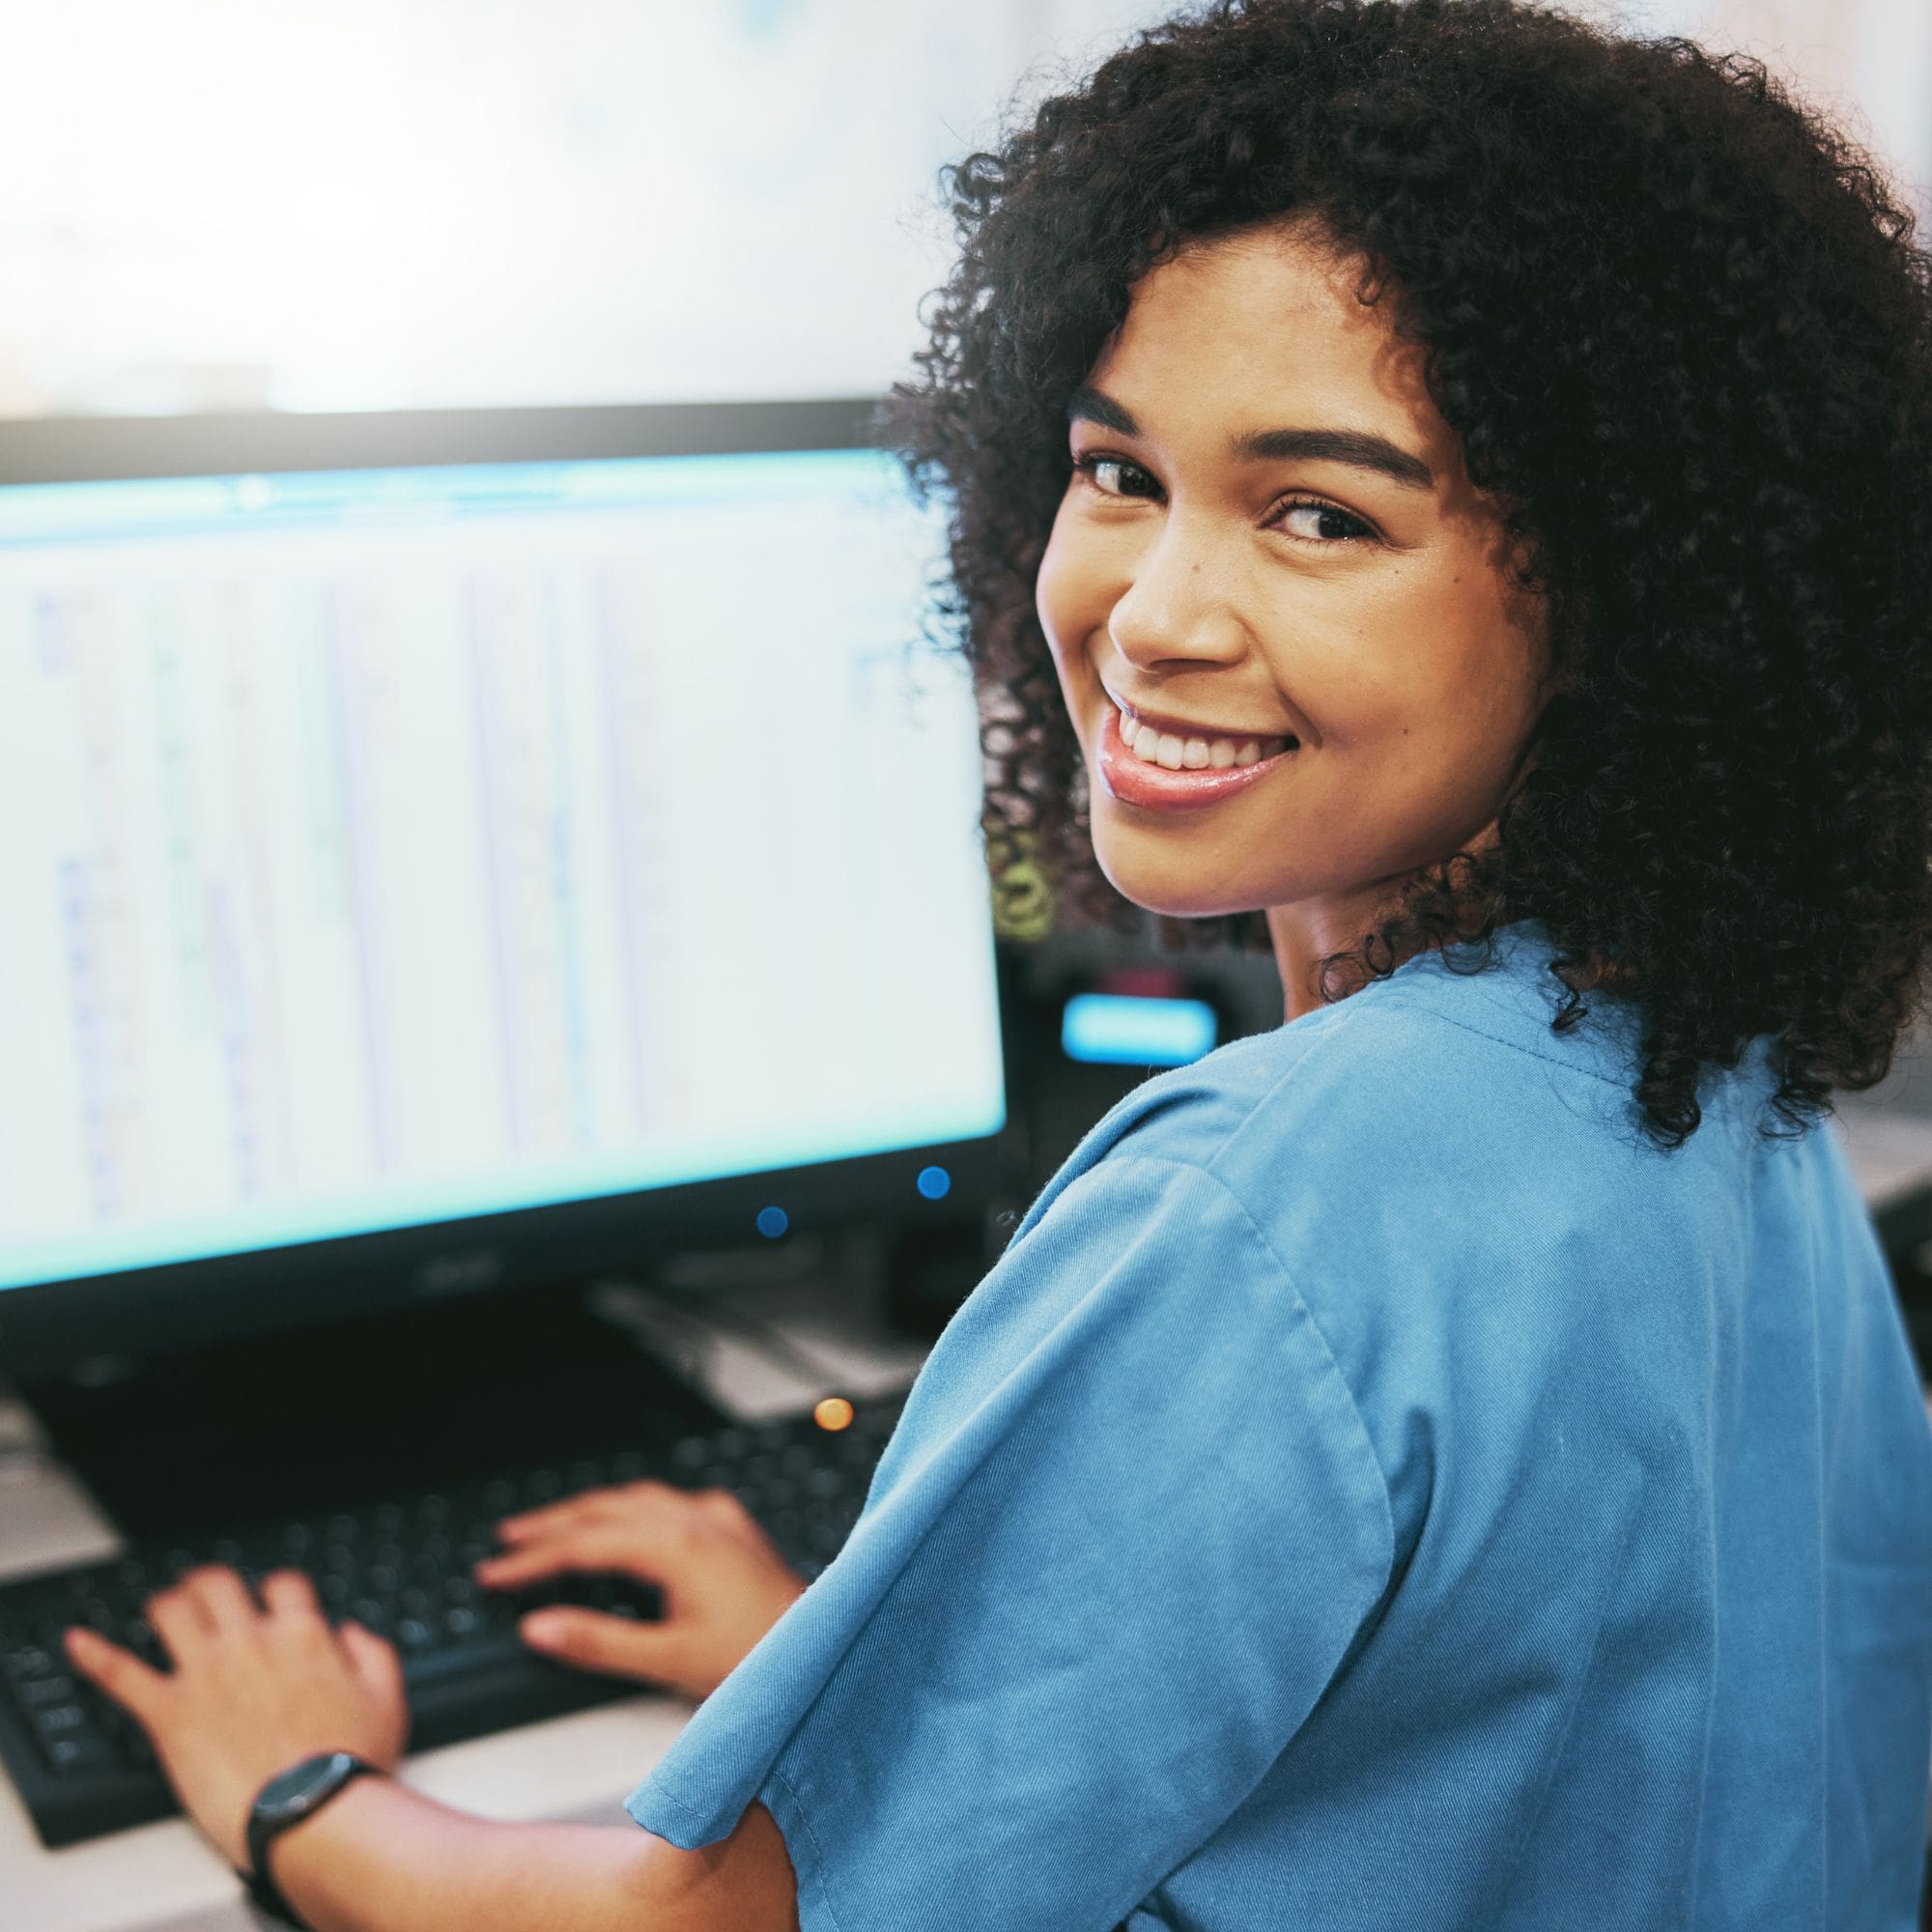 Female hospital employee working on computer